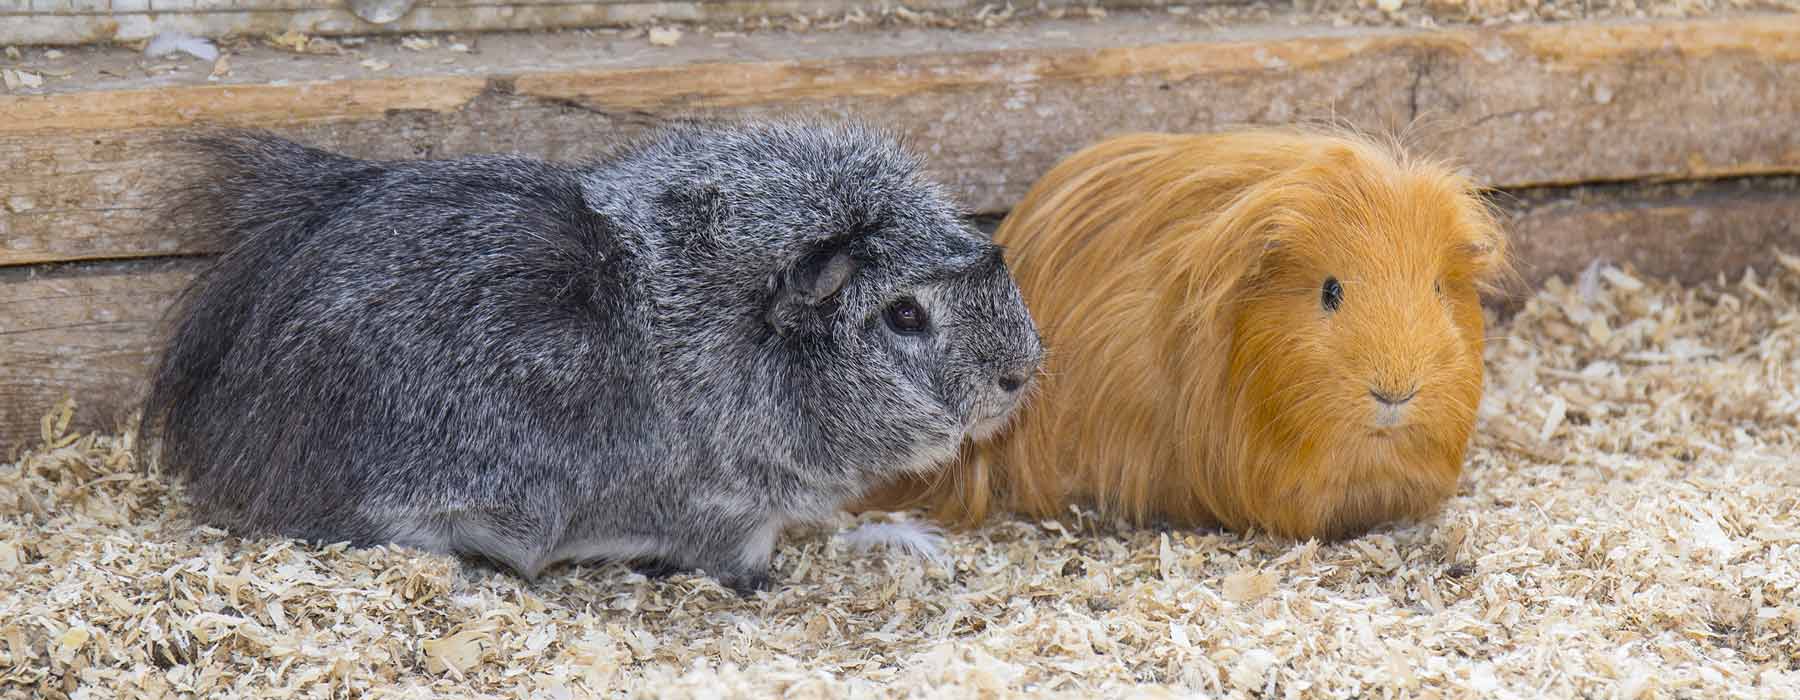 Is Pine Bedding Good for Guinea Pigs? | Safe Pine Wood Shavings